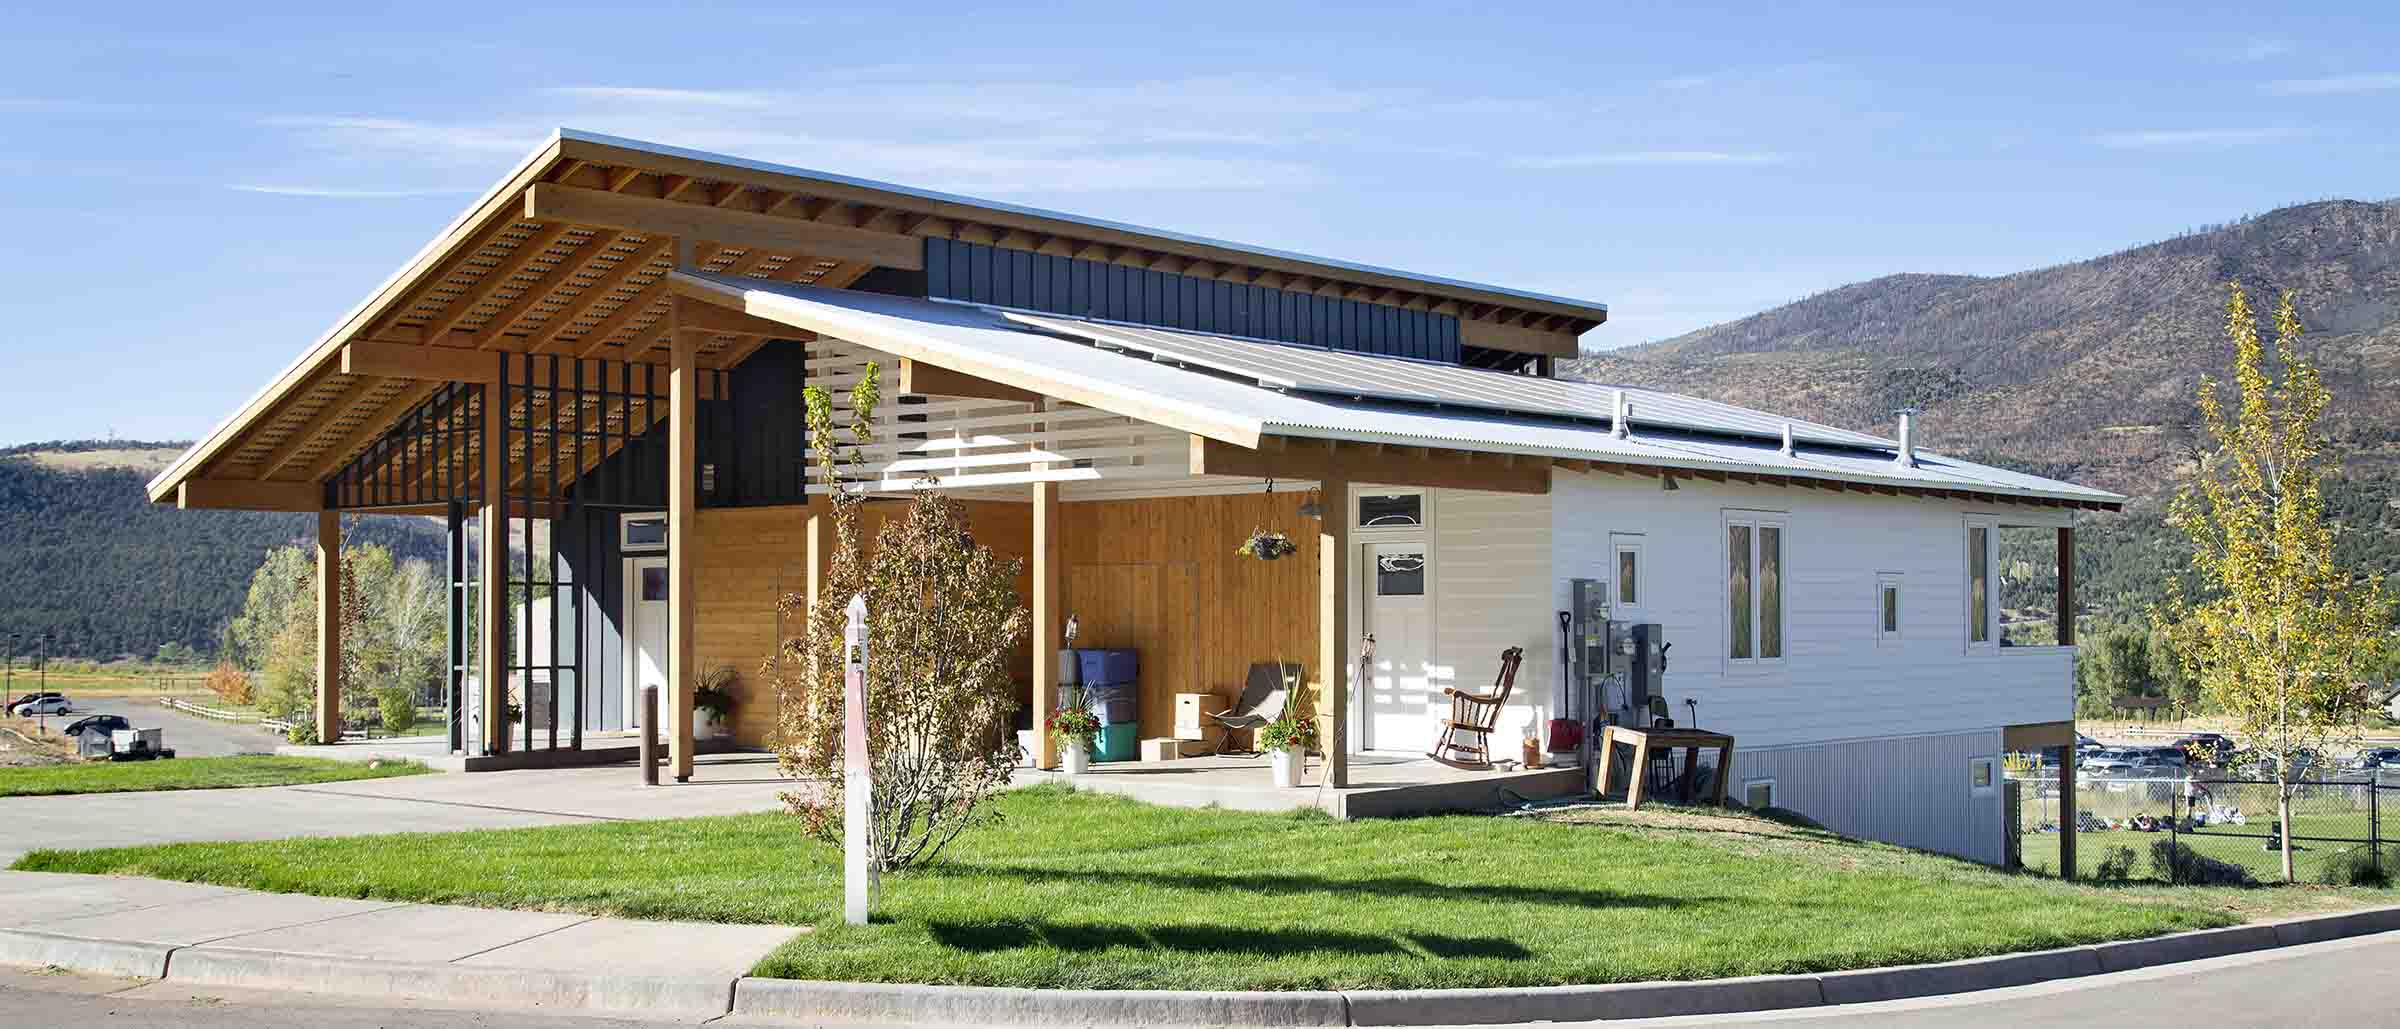 Basalt Affordable Housing by Roaring Fork Engineering